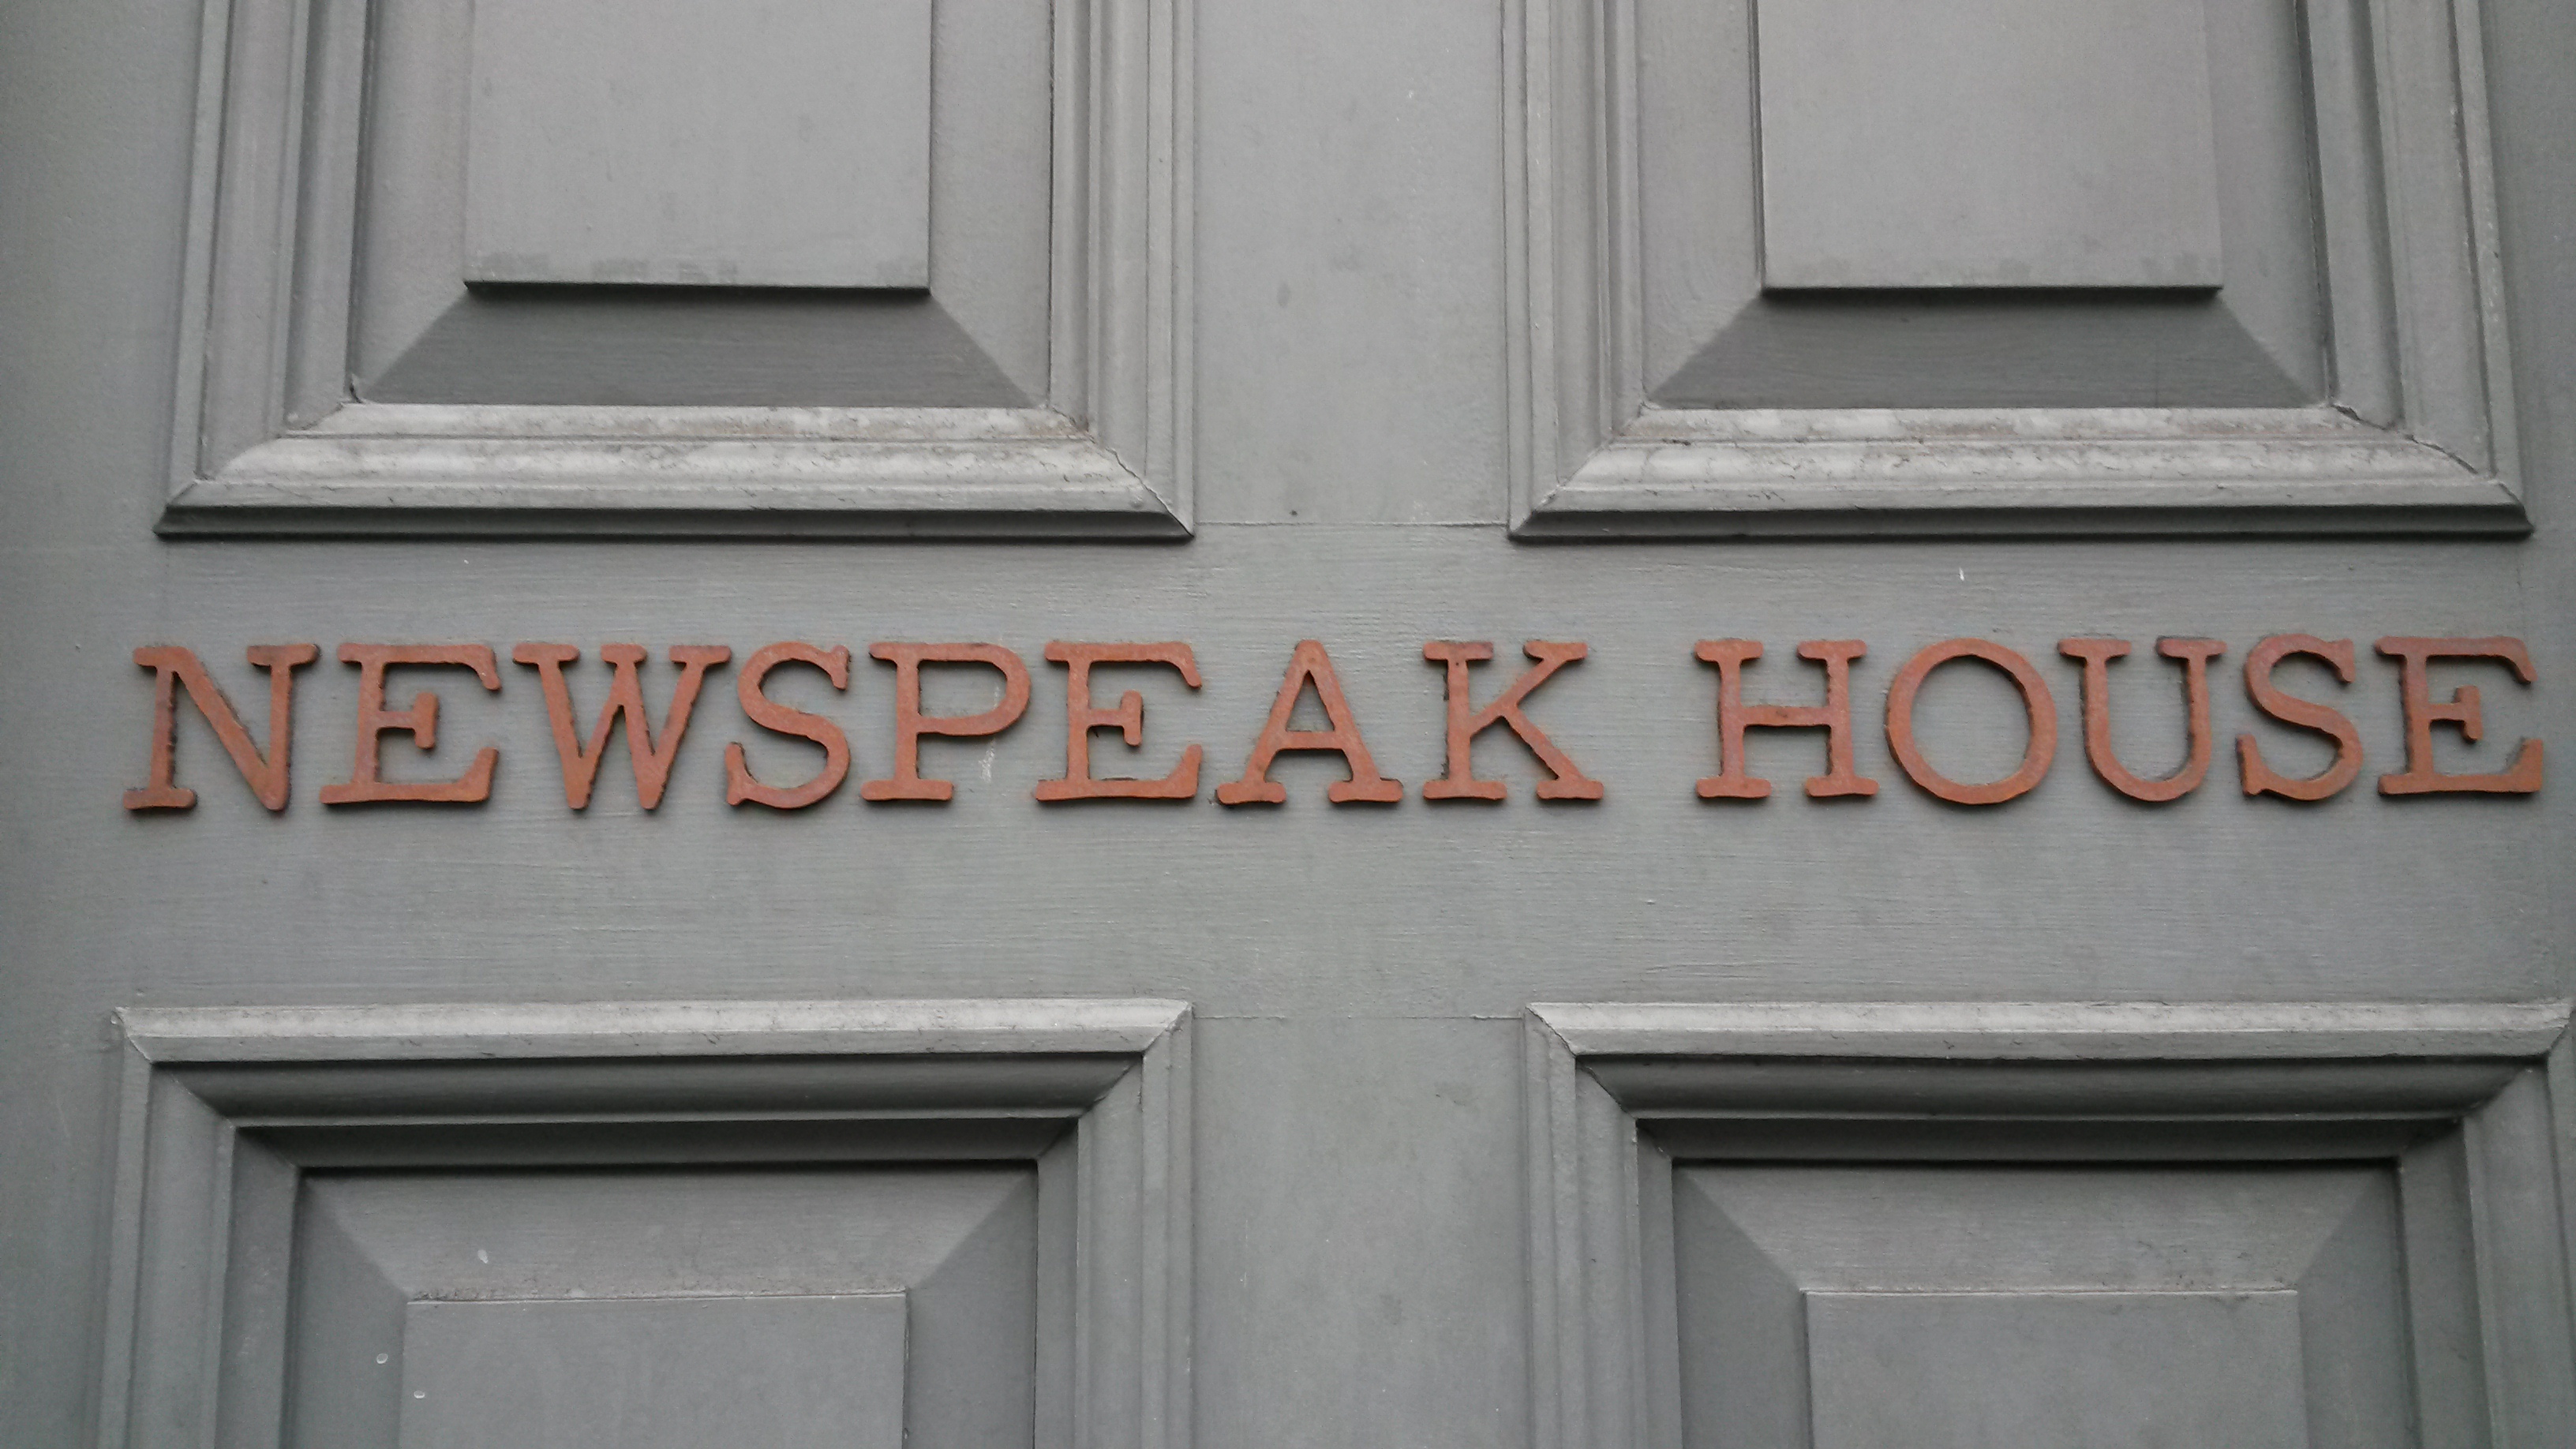 Newspeak House in London